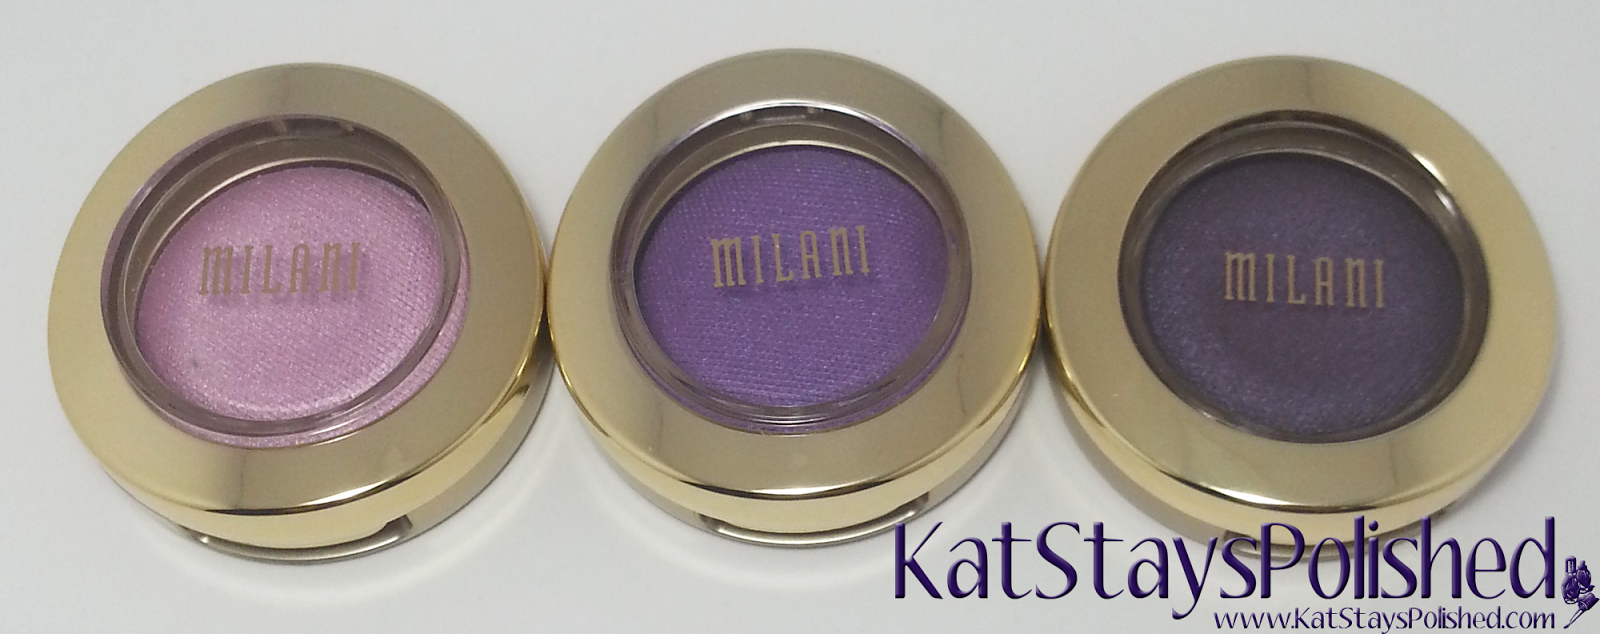 Milani Bella Eyes Gel Powder Eye Shadow - Pink - Violet - Purple | Kat Stays Polished